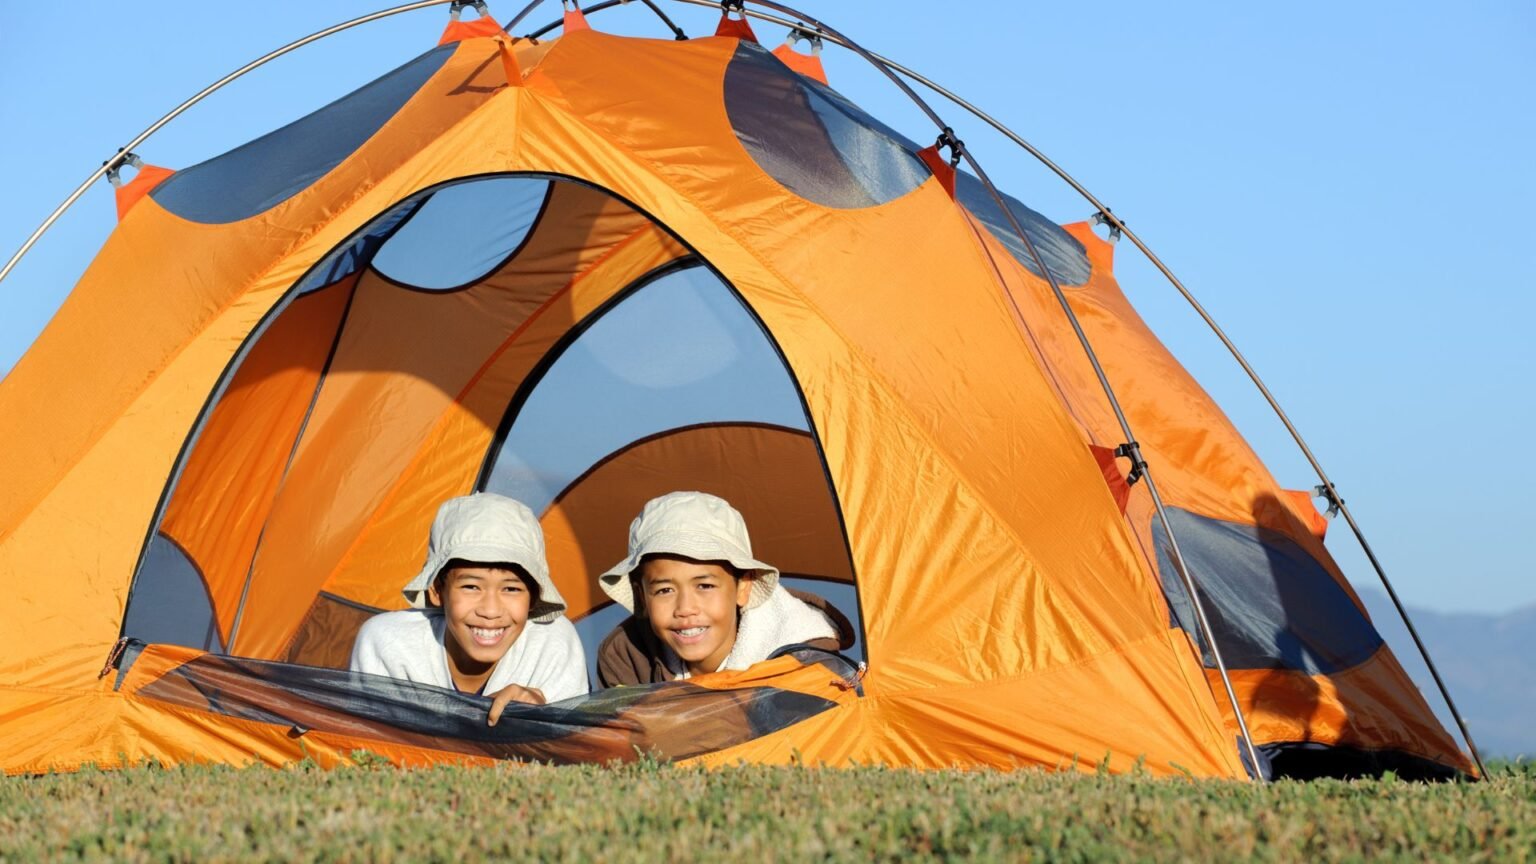 tent that fits two queen air mattress